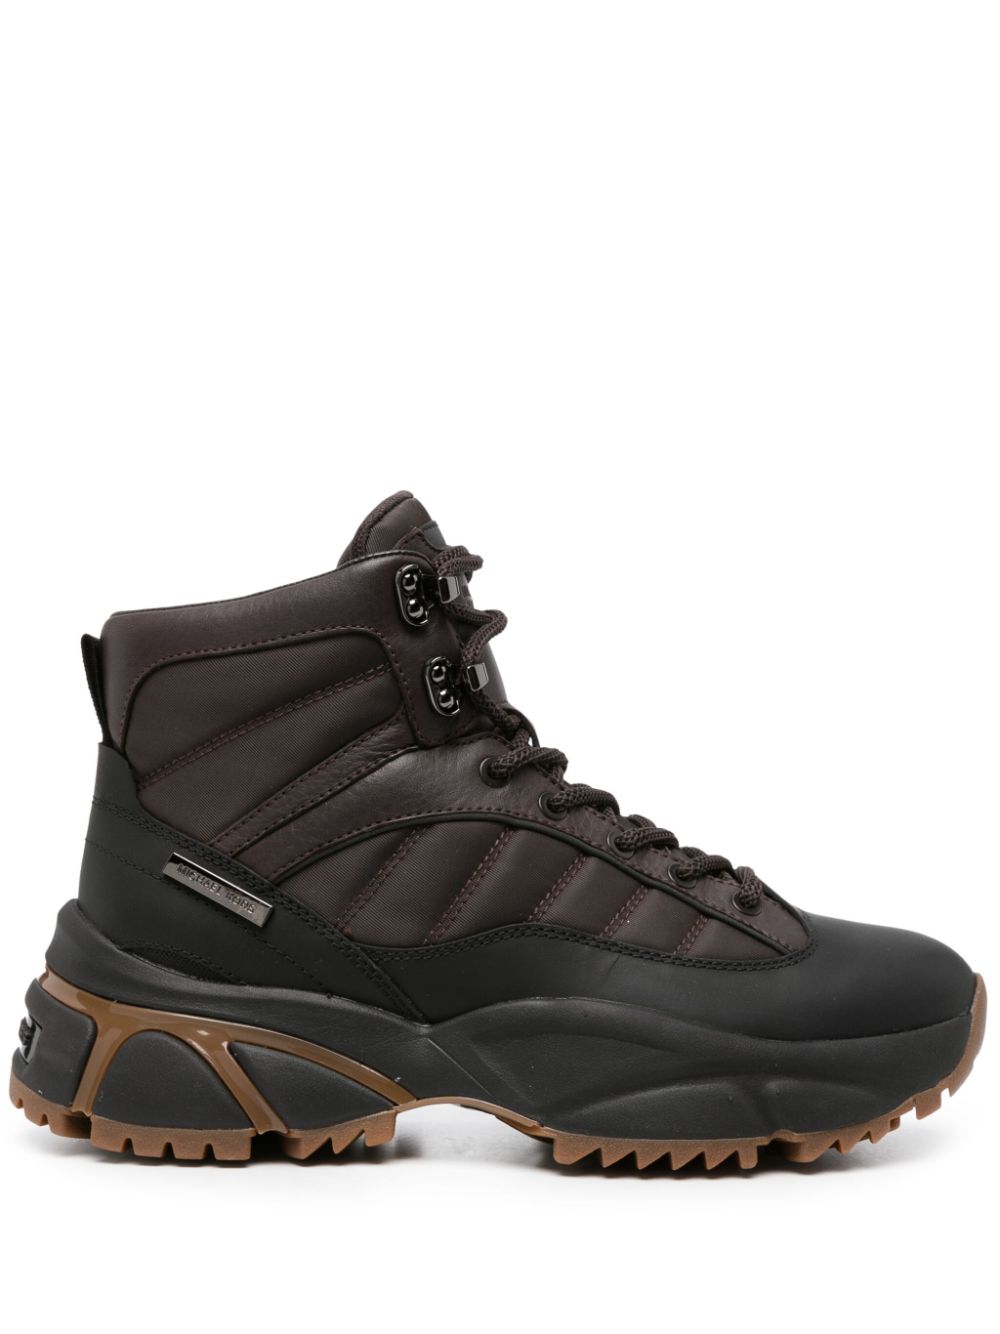 Logan waterproof leather boots